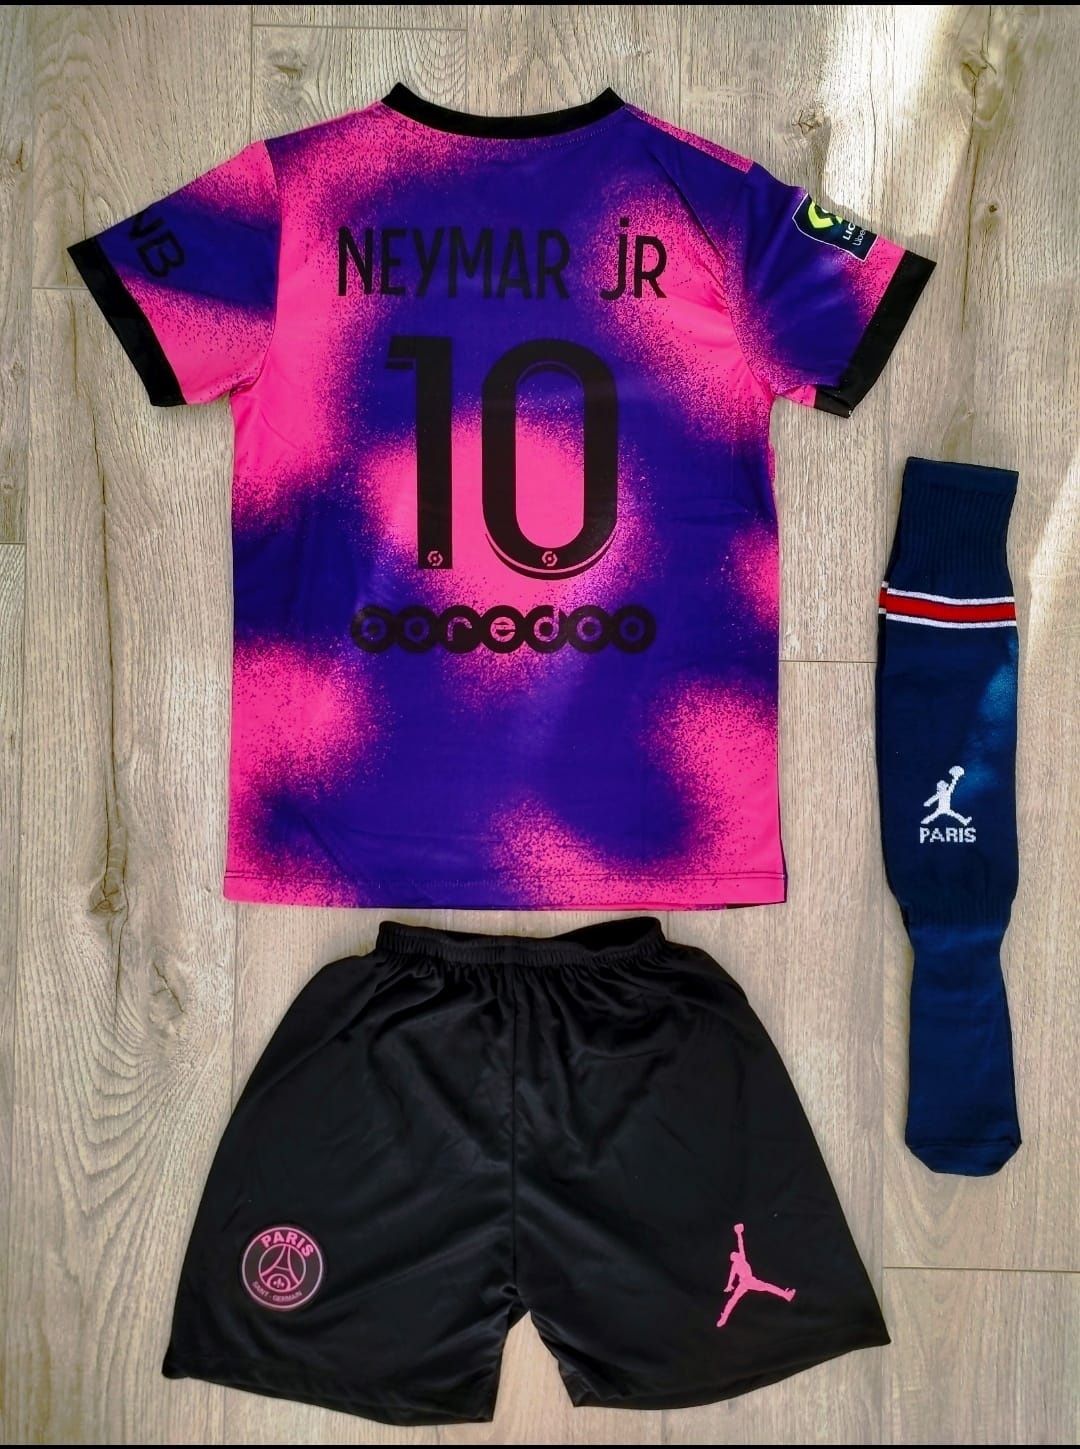 Echipament PSG Neymar copii 5-8 ani